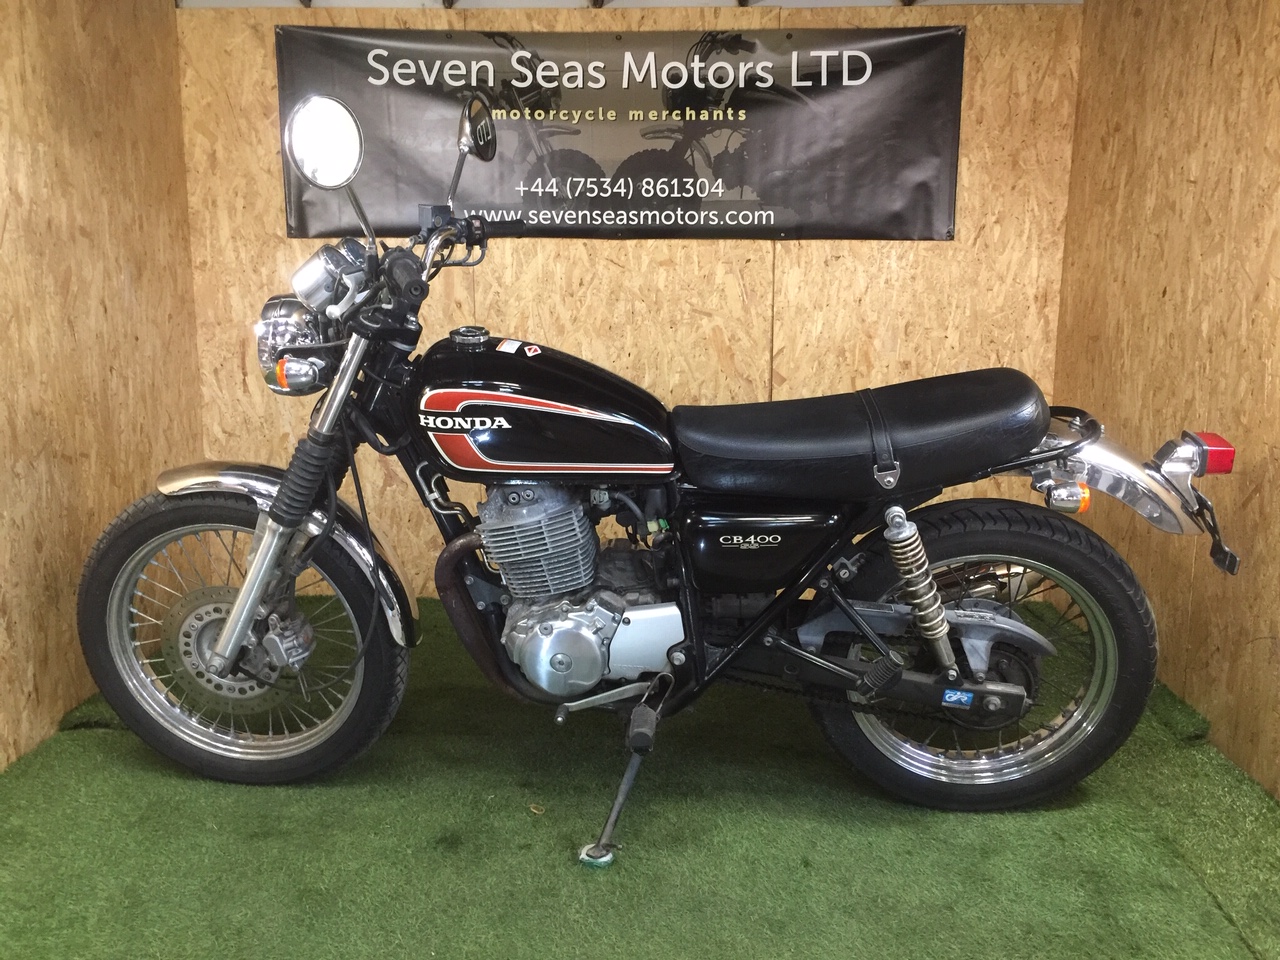 Honda-CB400SS-Bike | Seven Seas Motors